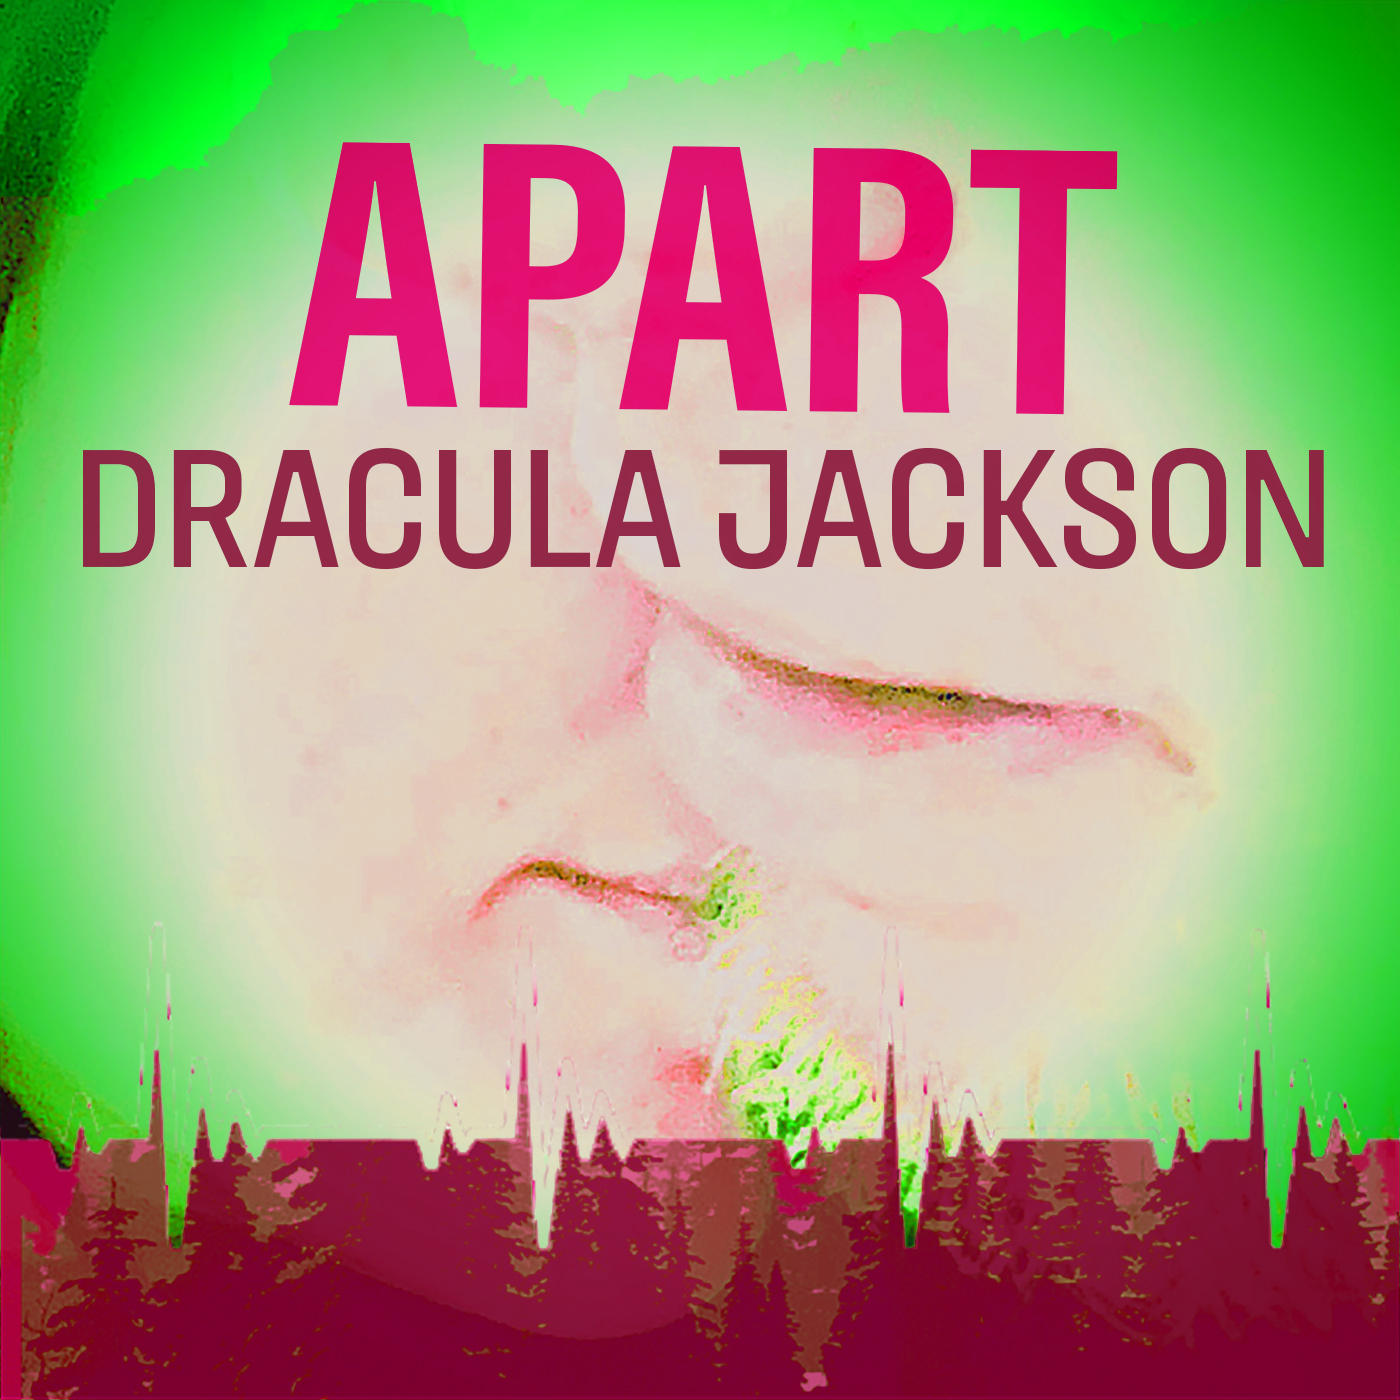 Dracula Jackson